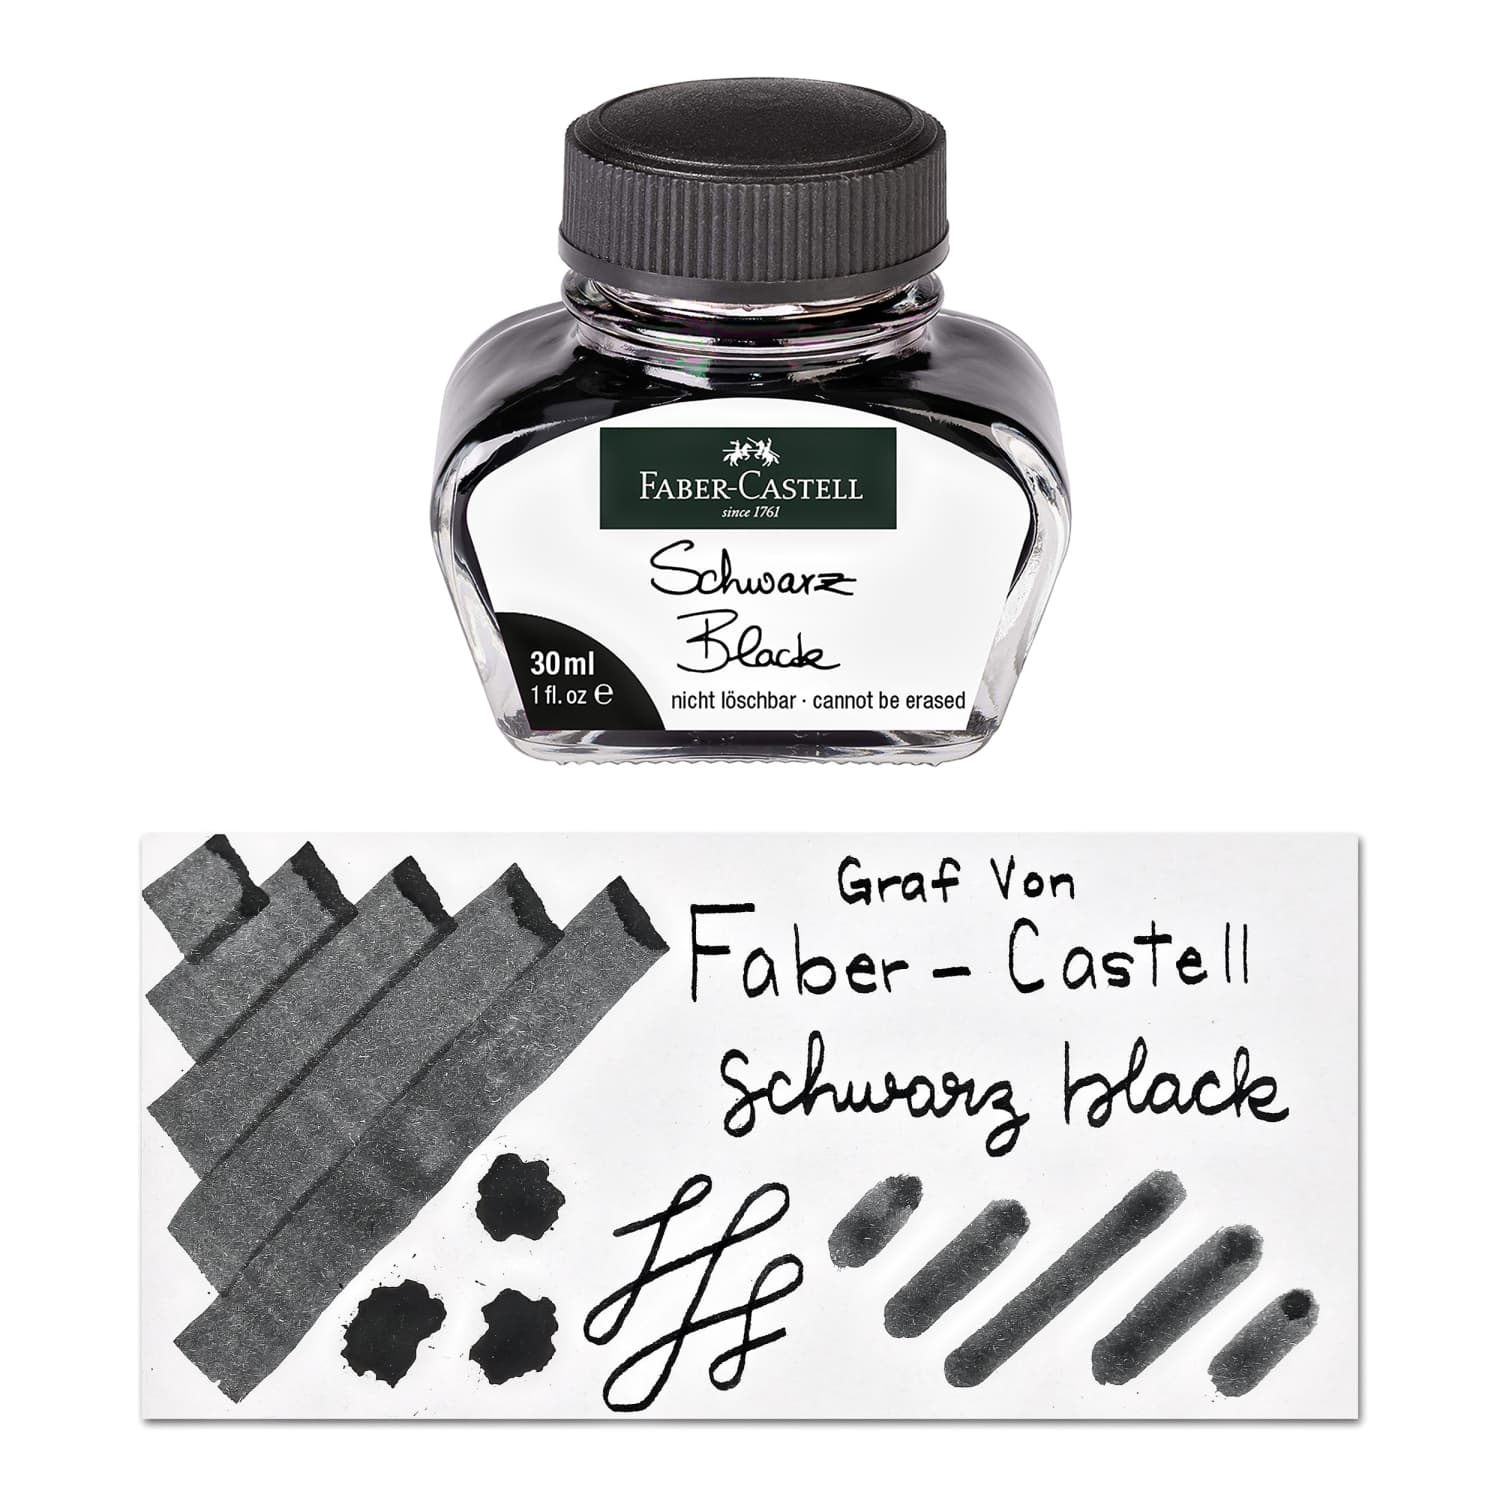 Faber-Castell Black 30ml Bottled Ink